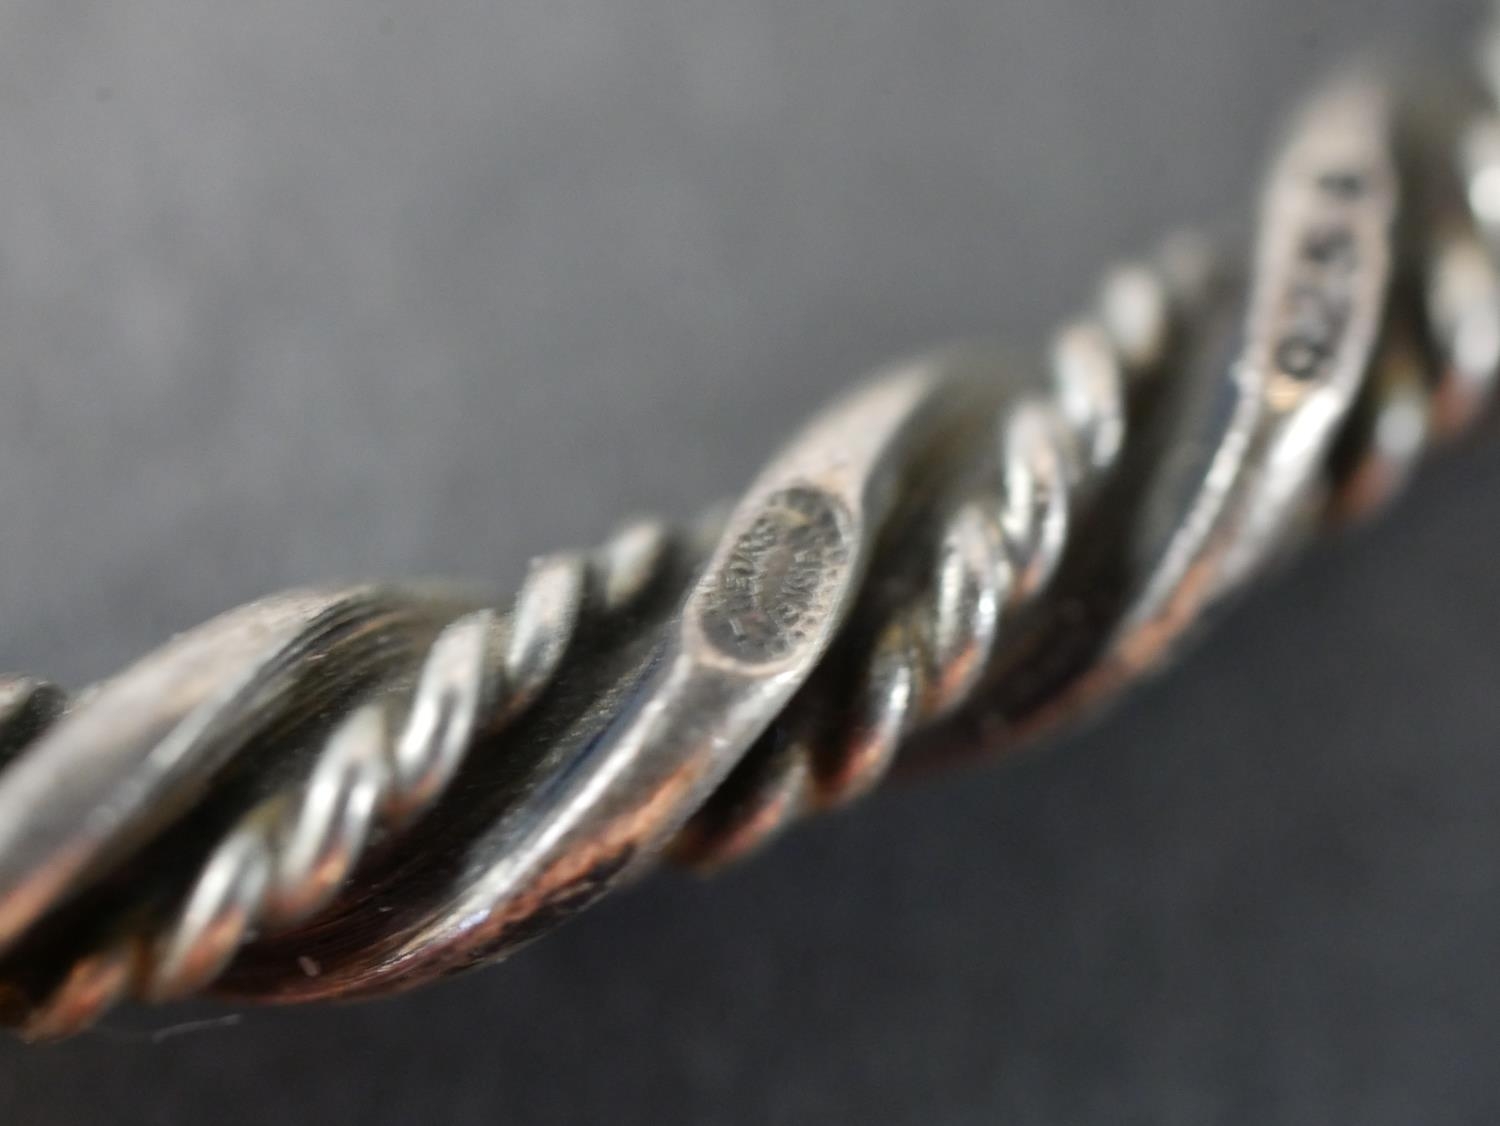 A Georg Jensen silver rope twist bangle, design no. 17B, George Jensen oval mark. - Image 7 of 7